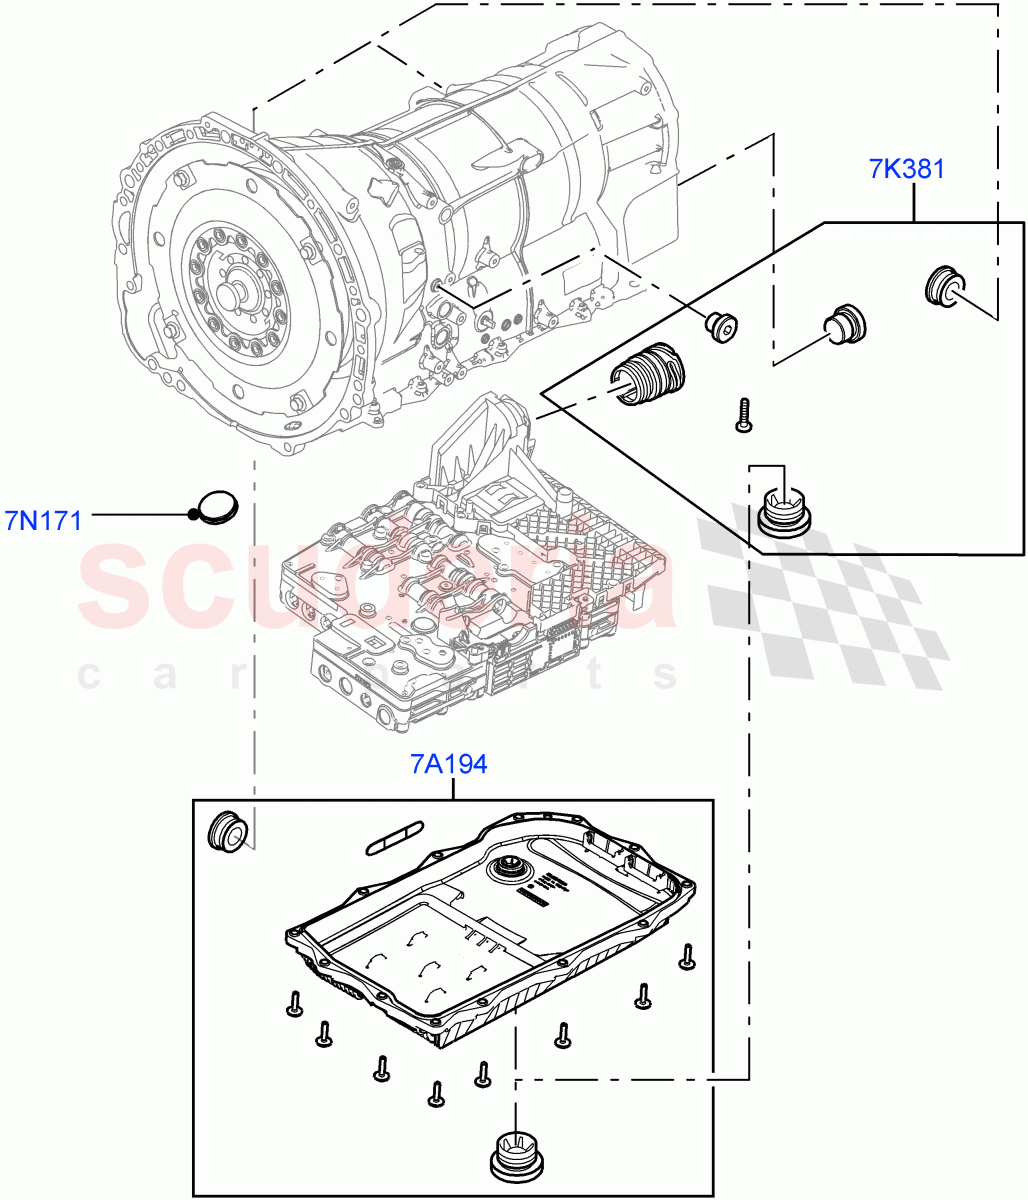 Transmission External Components(5.0L P AJ133 DOHC CDA S/C Enhanced,8 Speed Auto Trans ZF 8HP70 4WD)((V)FROMKA000001) of Land Rover Land Rover Range Rover Velar (2017+) [3.0 DOHC GDI SC V6 Petrol]